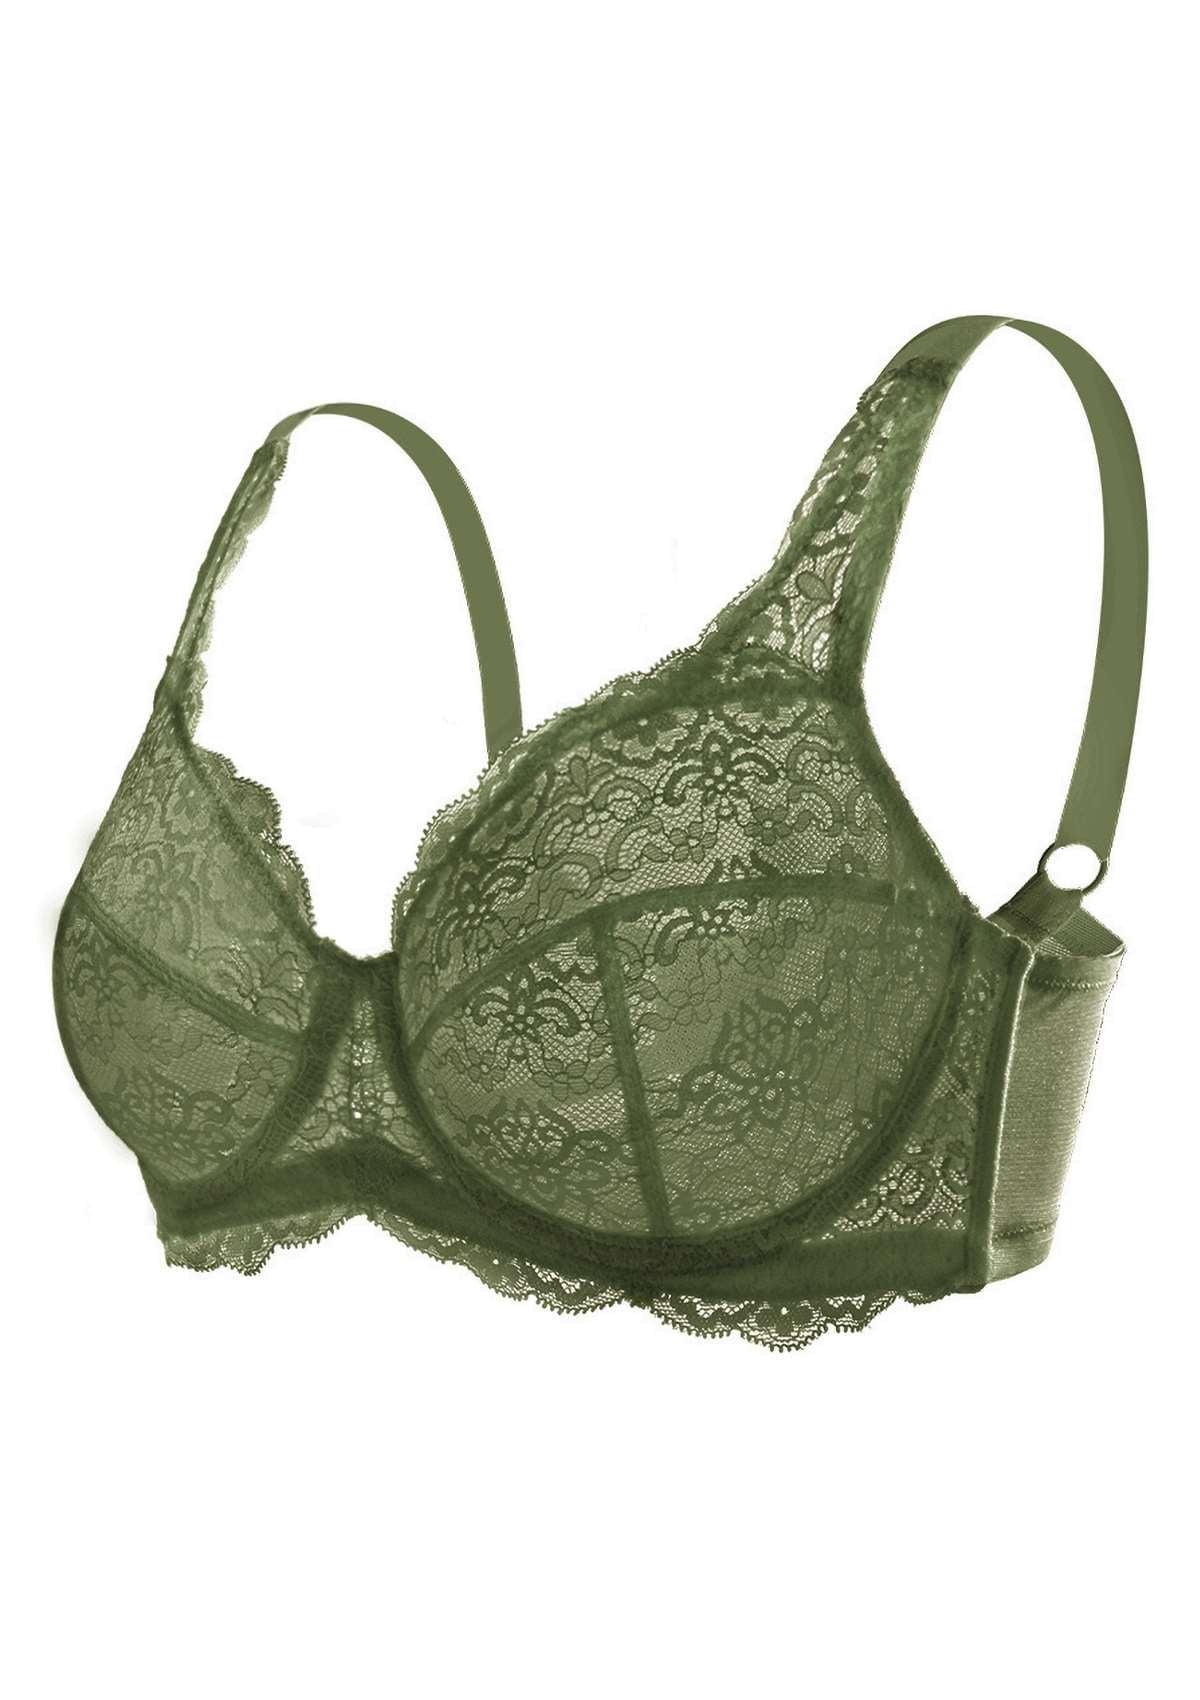 HSIA All-Over Floral Lace Unlined Bra: Minimizer Bra For Heavy Breasts - Dark Green / 38 / DD/E